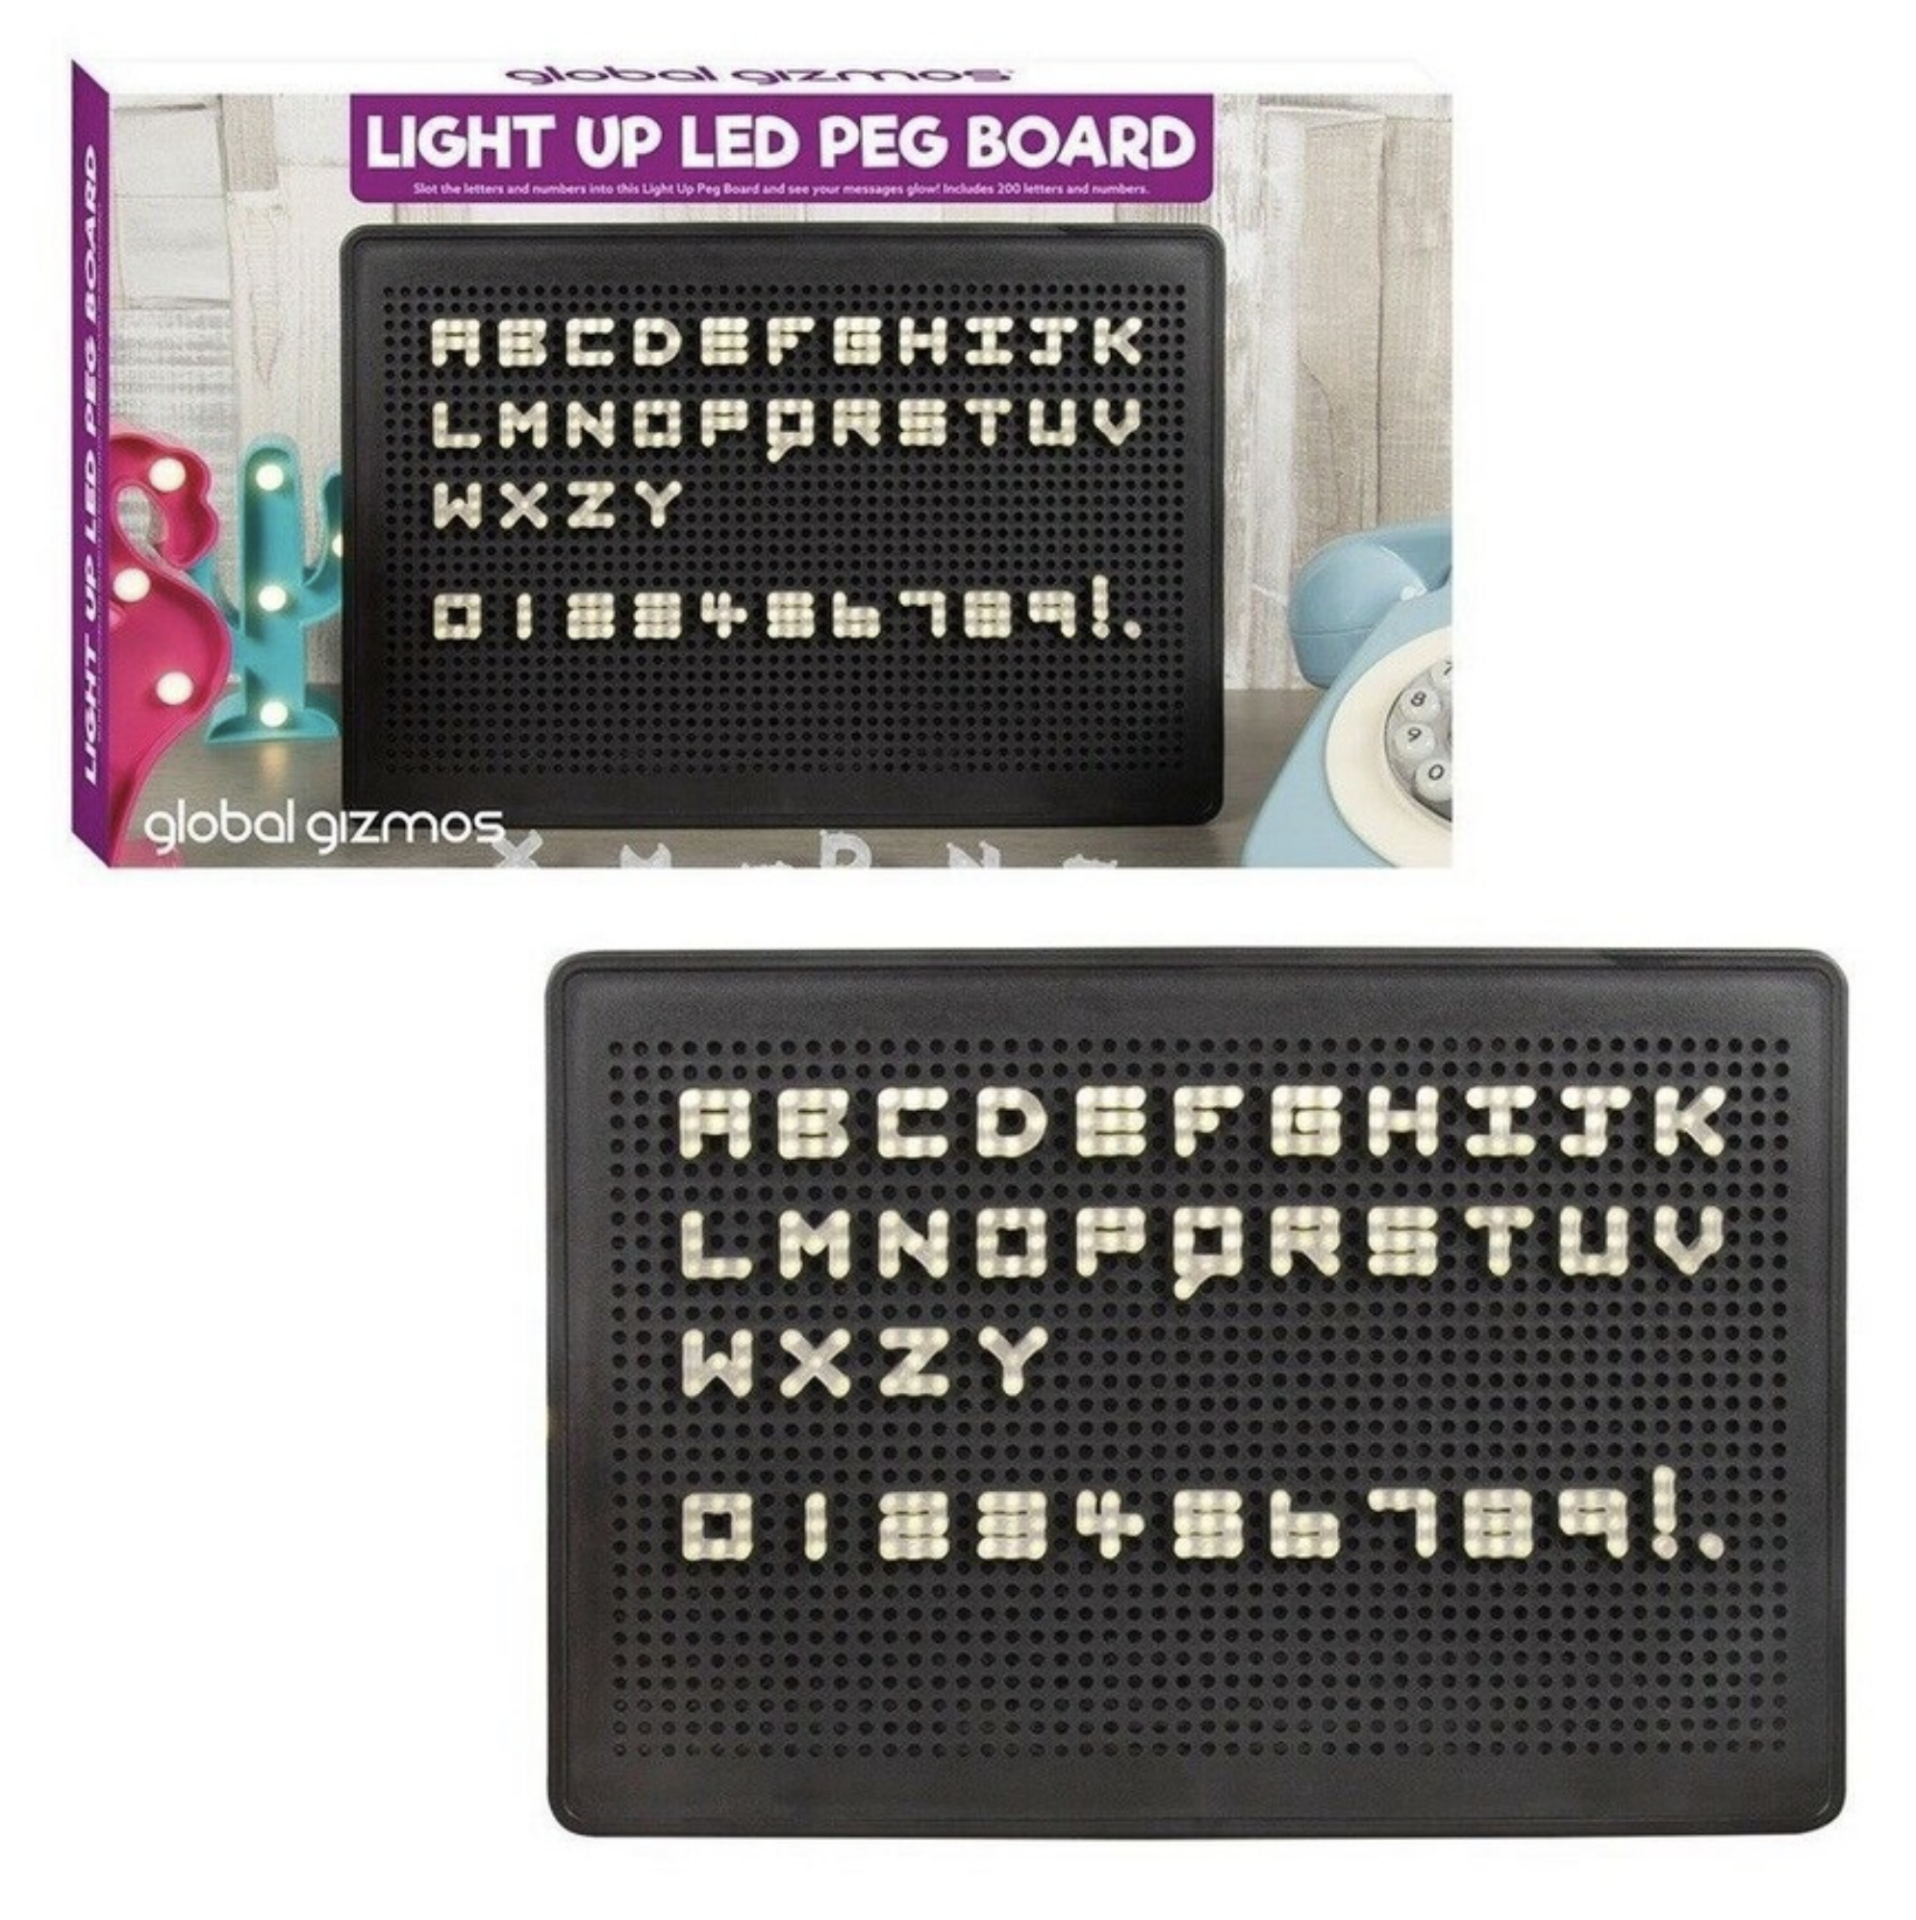 3 x MESSAGE BOARD, LIGHT UP LED PEG BOARD - Image 5 of 5